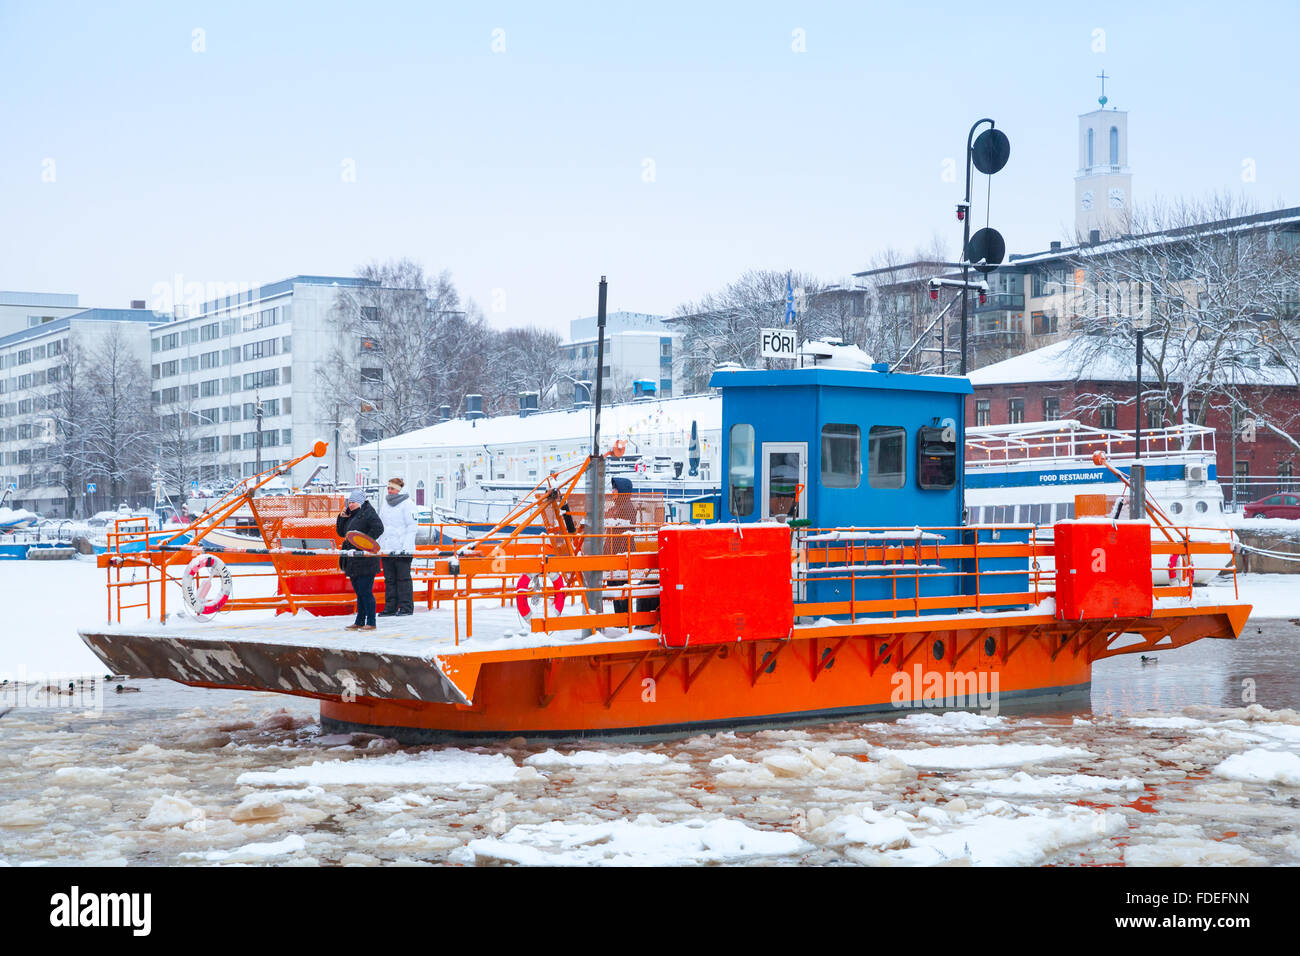 Turku, Finland - January 17, 2016: Ordinary passengers on small city boat Fori, light traffic ferry that has served Aura River Stock Photo